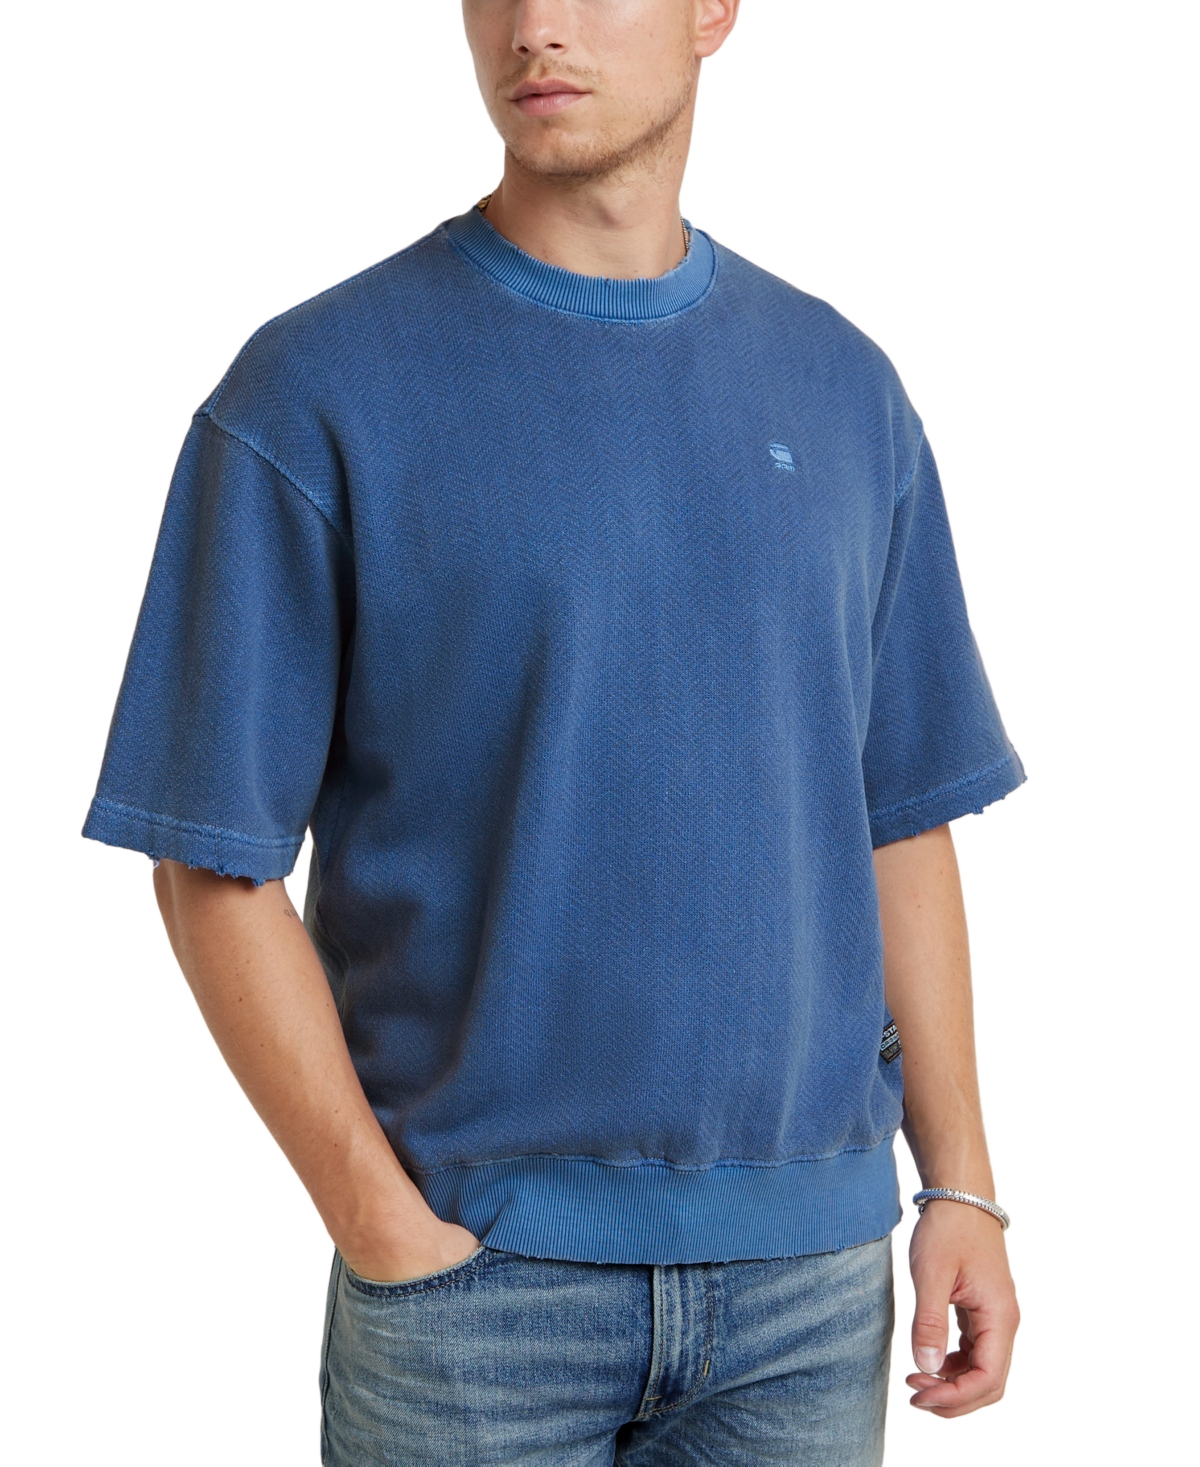 Men's Relaxed-Fit Sweatshirt - Radar Blue